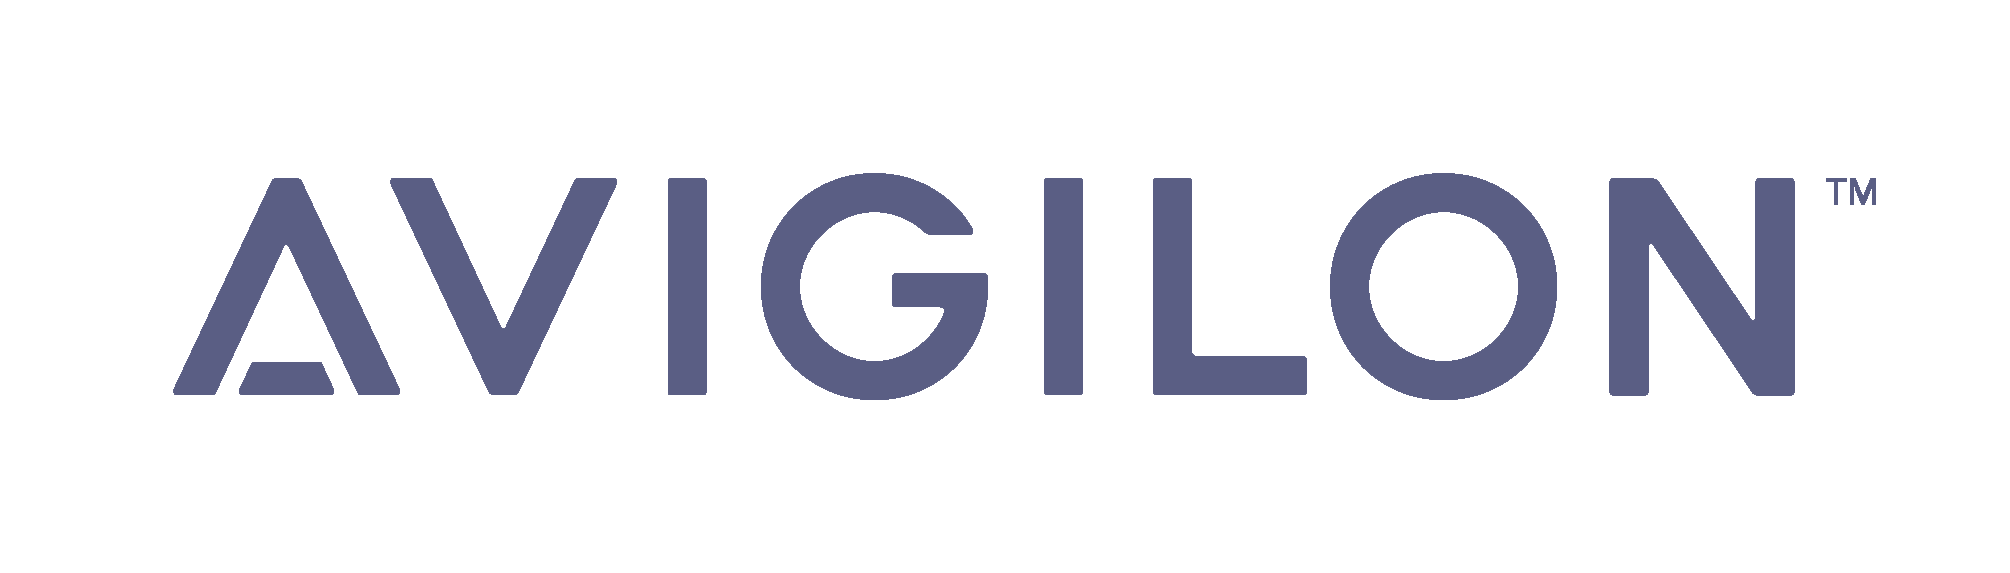 Avigilon Logo with transparent background